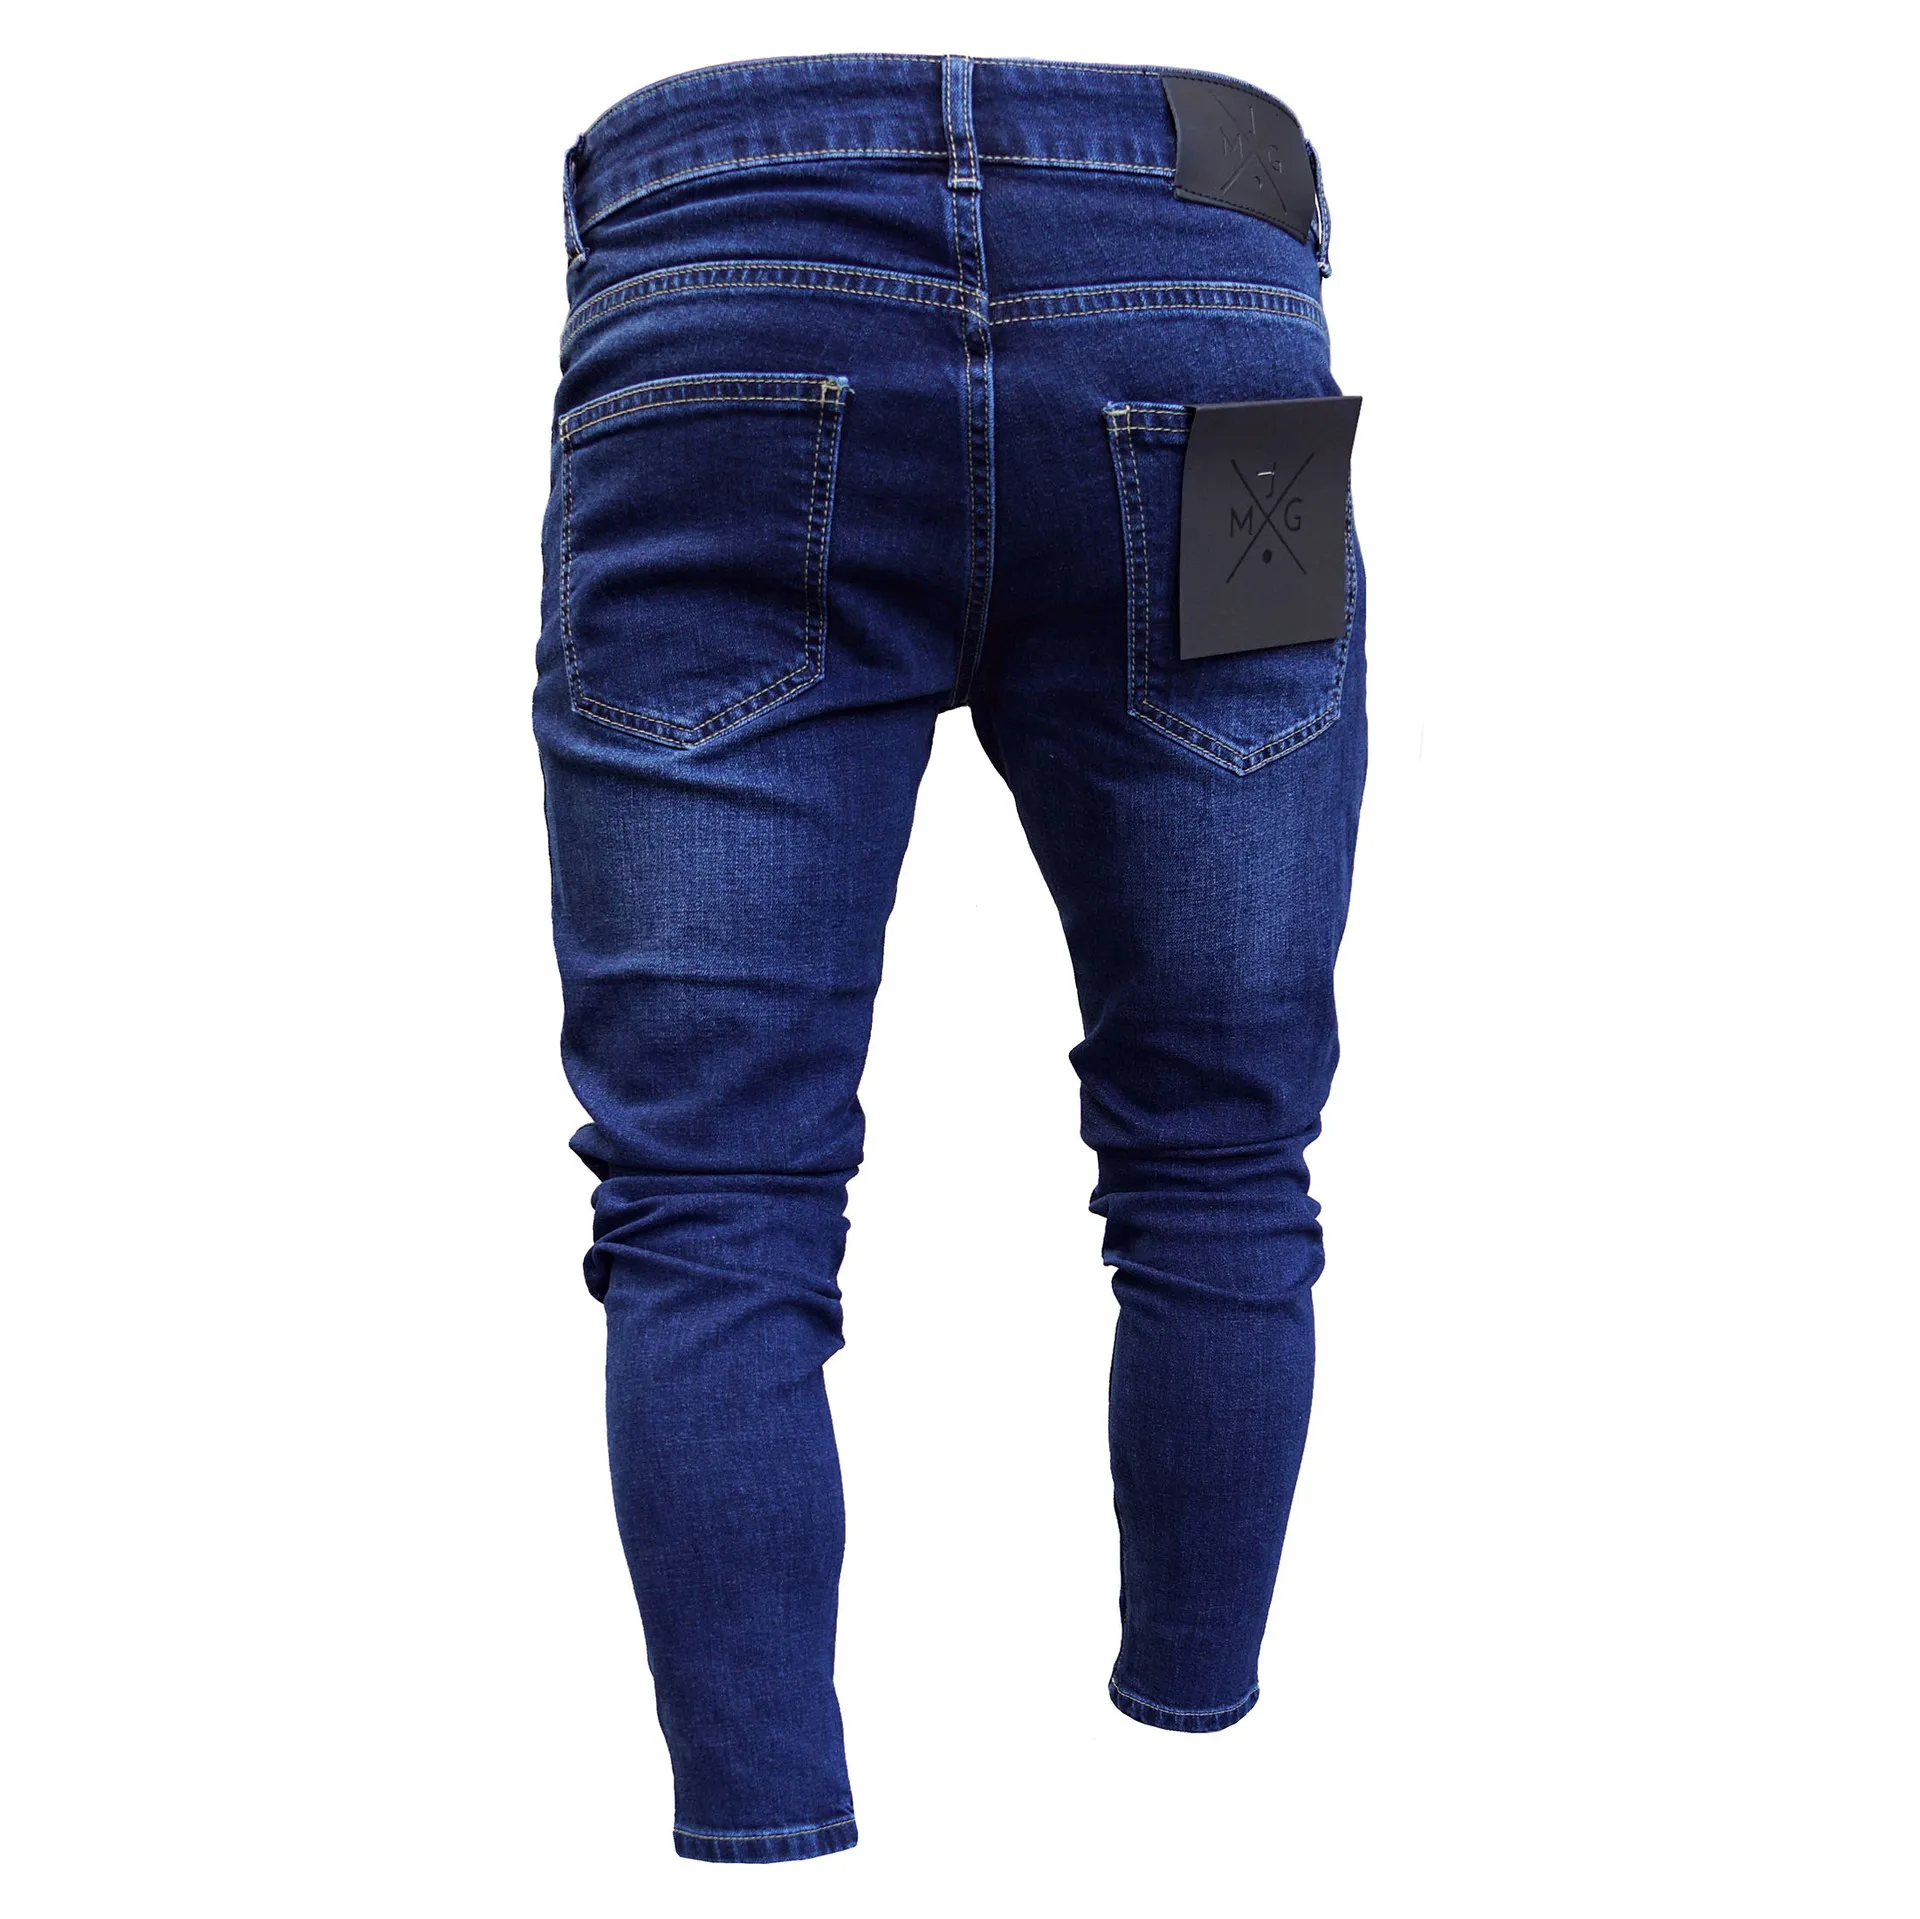 Lápiz Jean Pantalones Moda Washed Blue Jeans Para Hombre Ropa Color  Gradiente Largo Slim Fit Cremallera Biker Jeans279s De $235,86